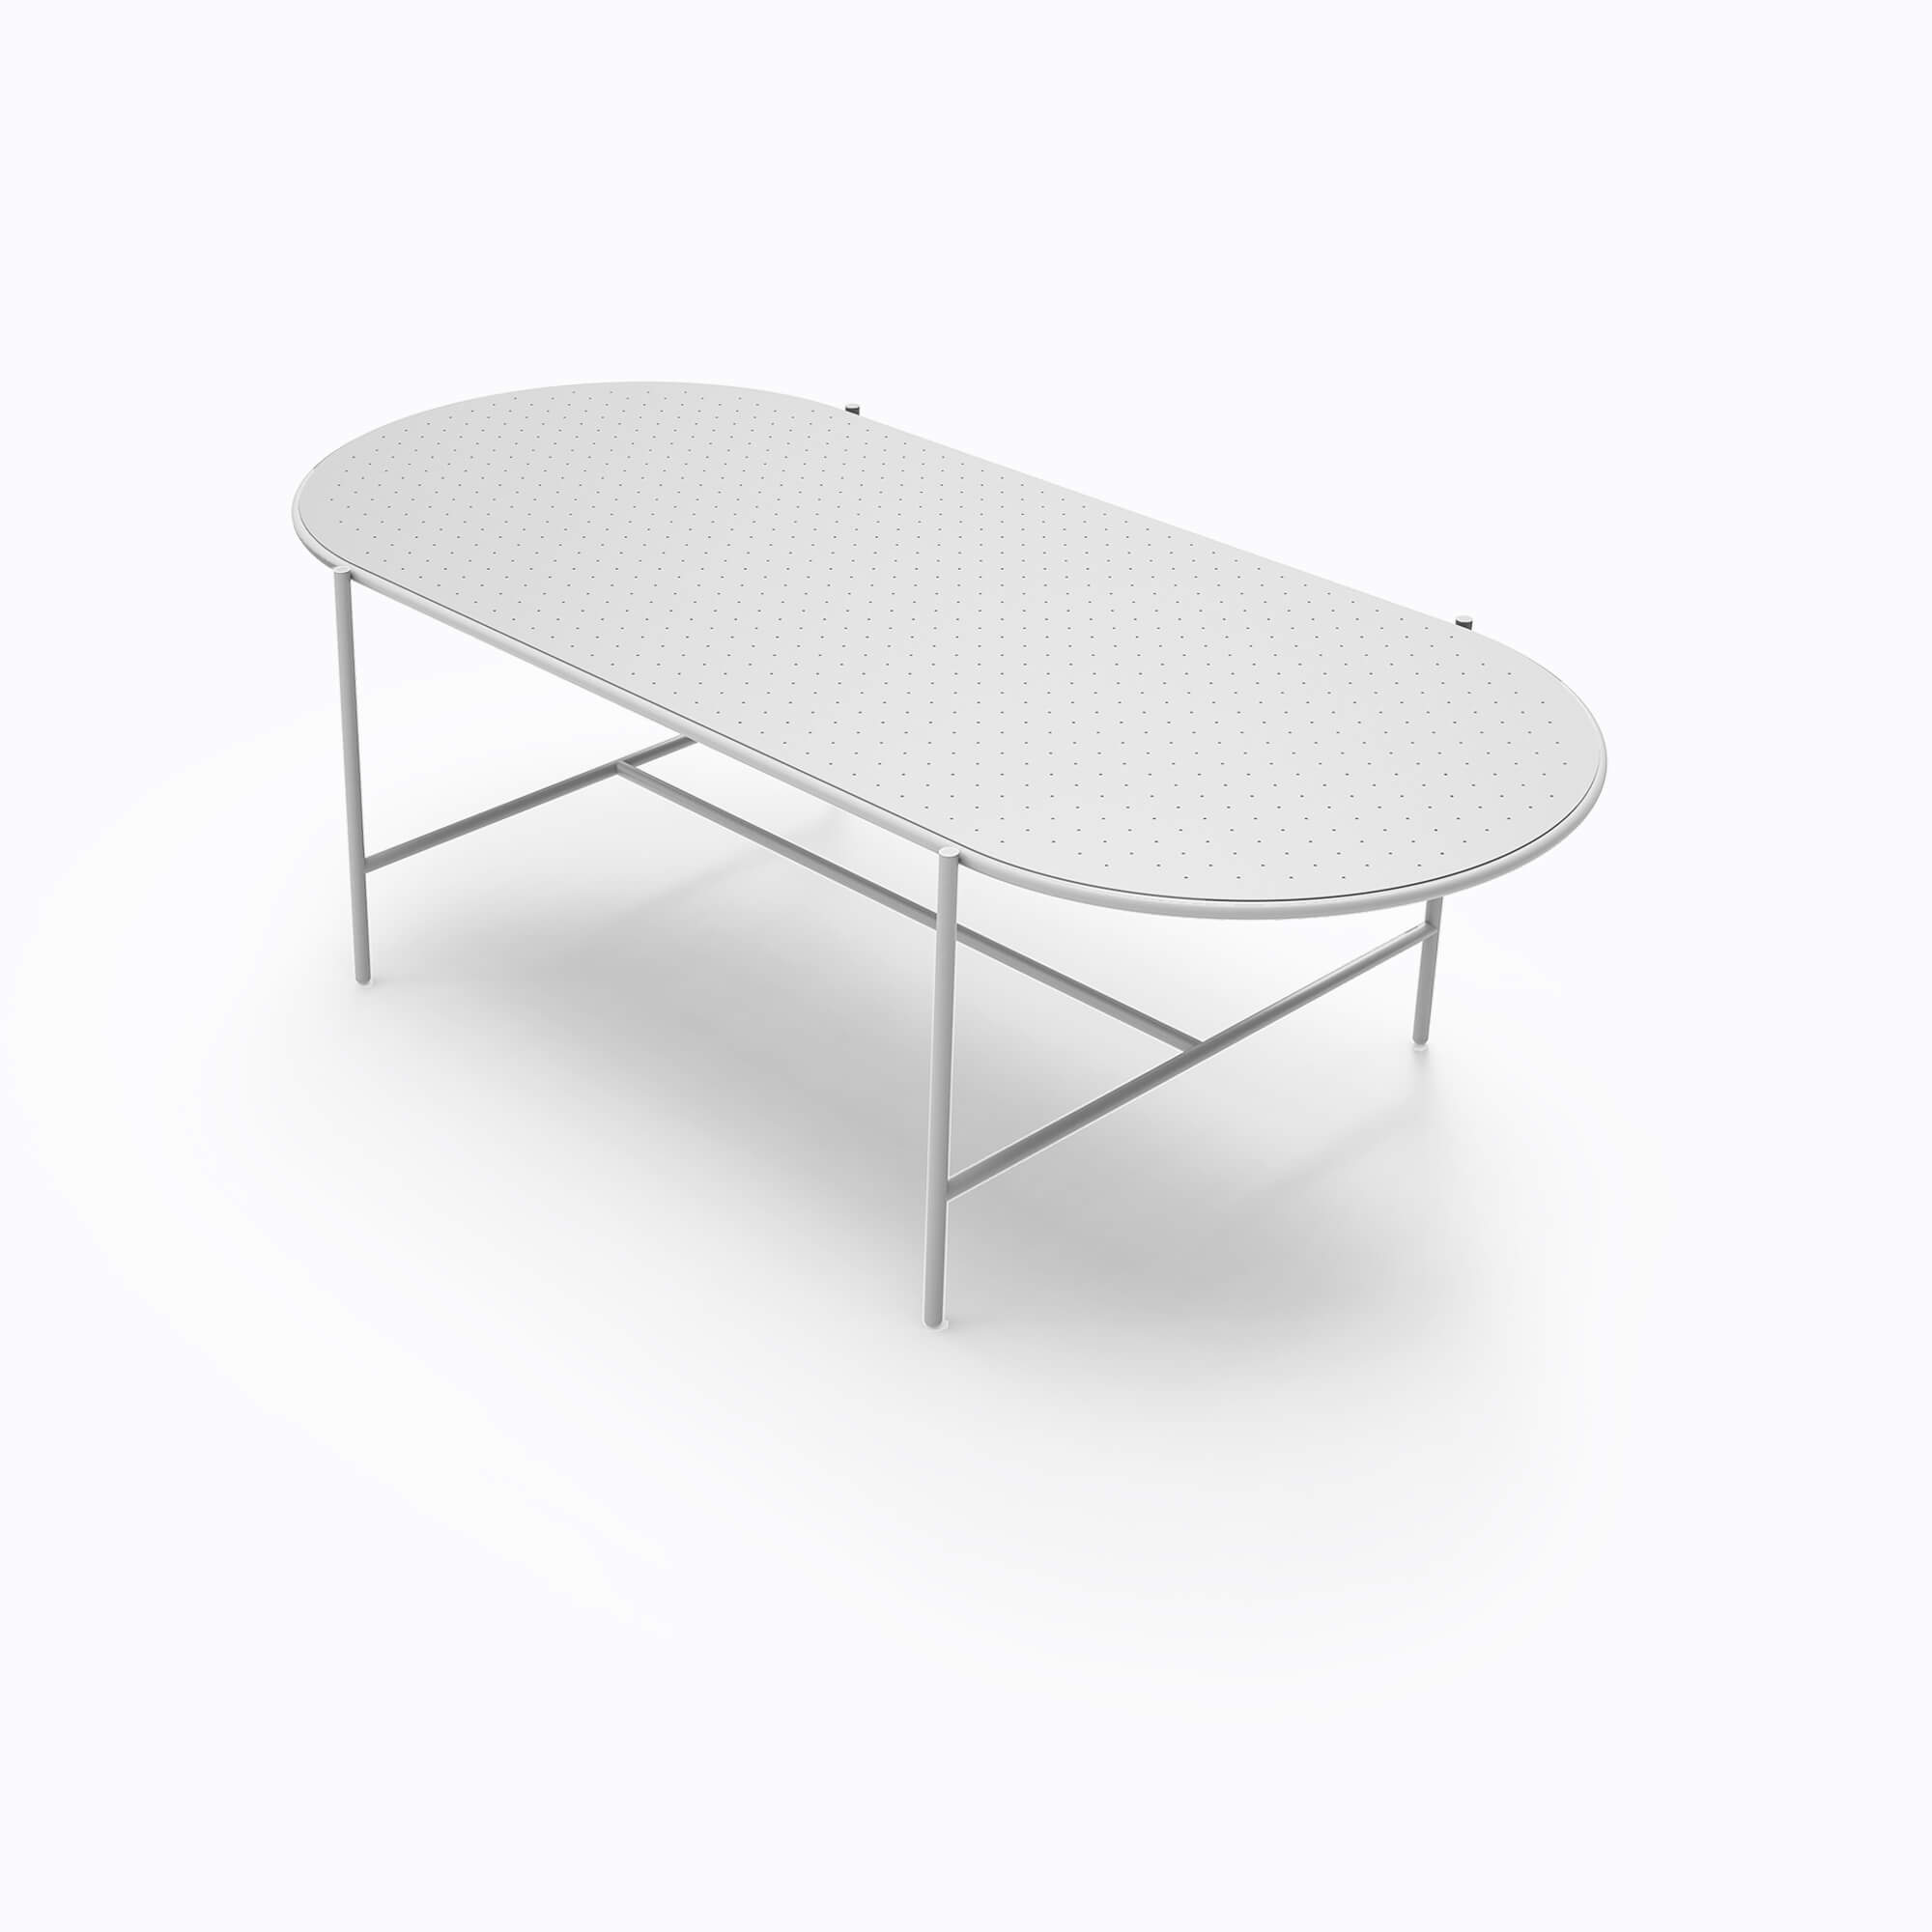 OUDOOR שולחן מתכת אלומיניום אפור בהיר צבעוני 4 מושבים